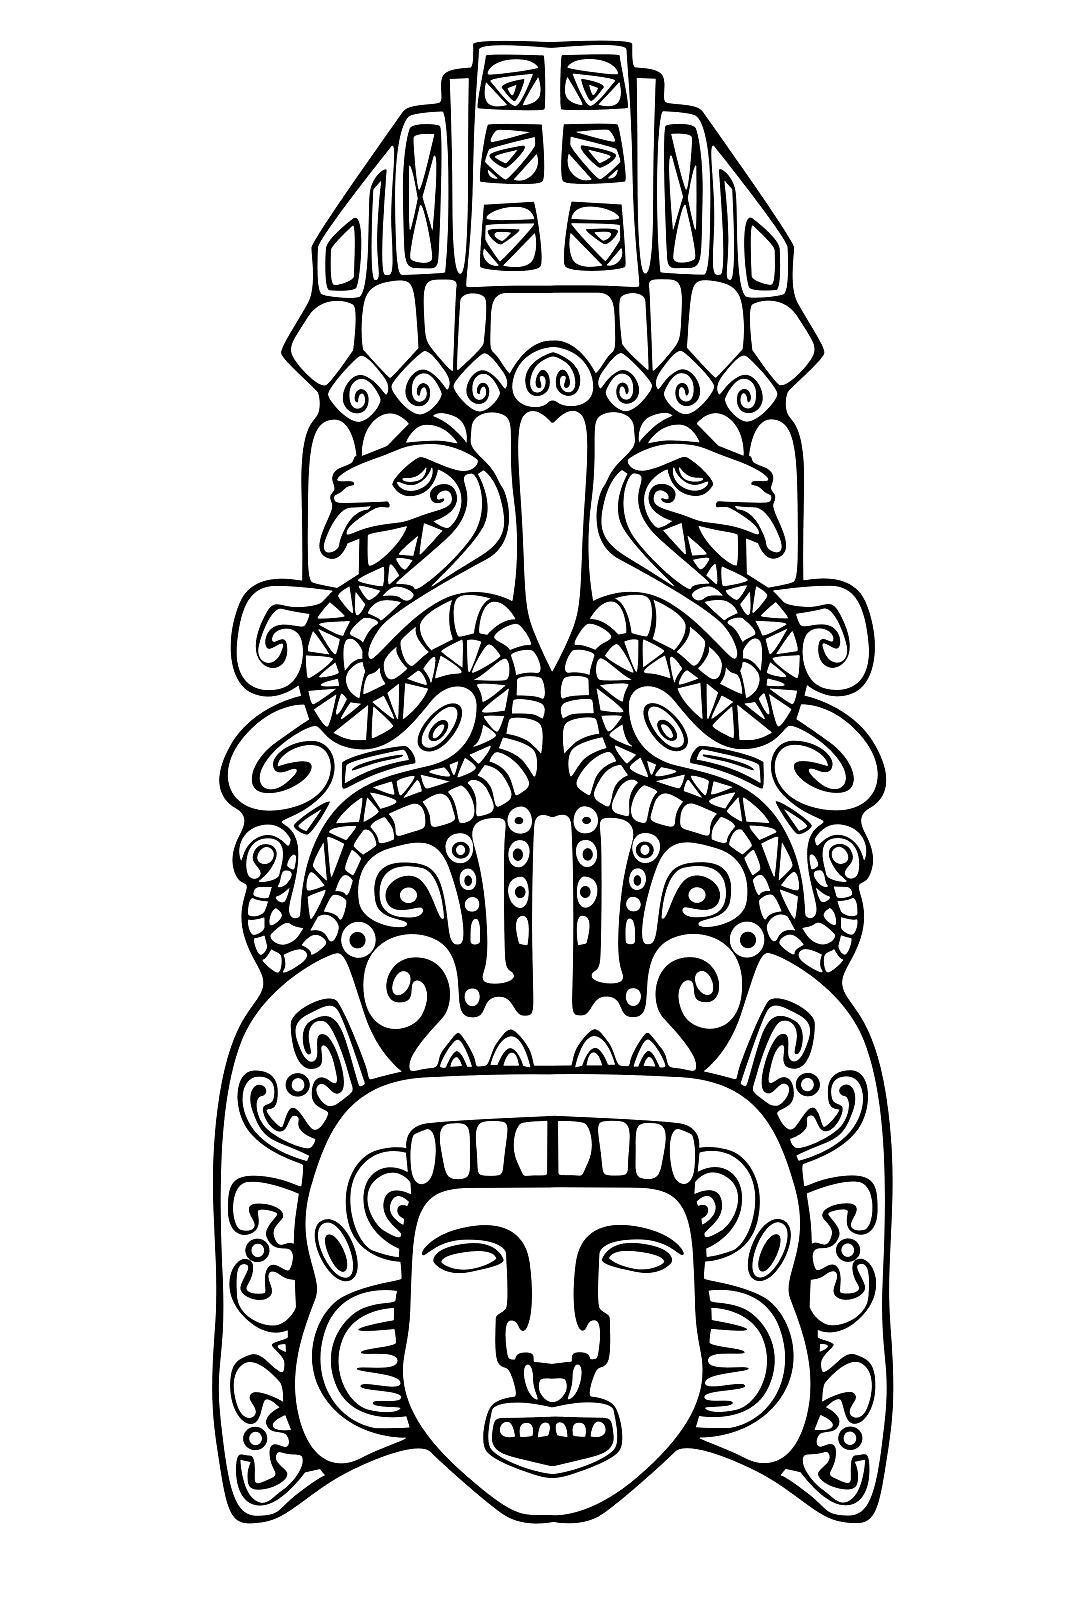 Colorear para adultos : Mayas, Aztecas e Incas - 7, Artista : Rocich   Origen : 123rf